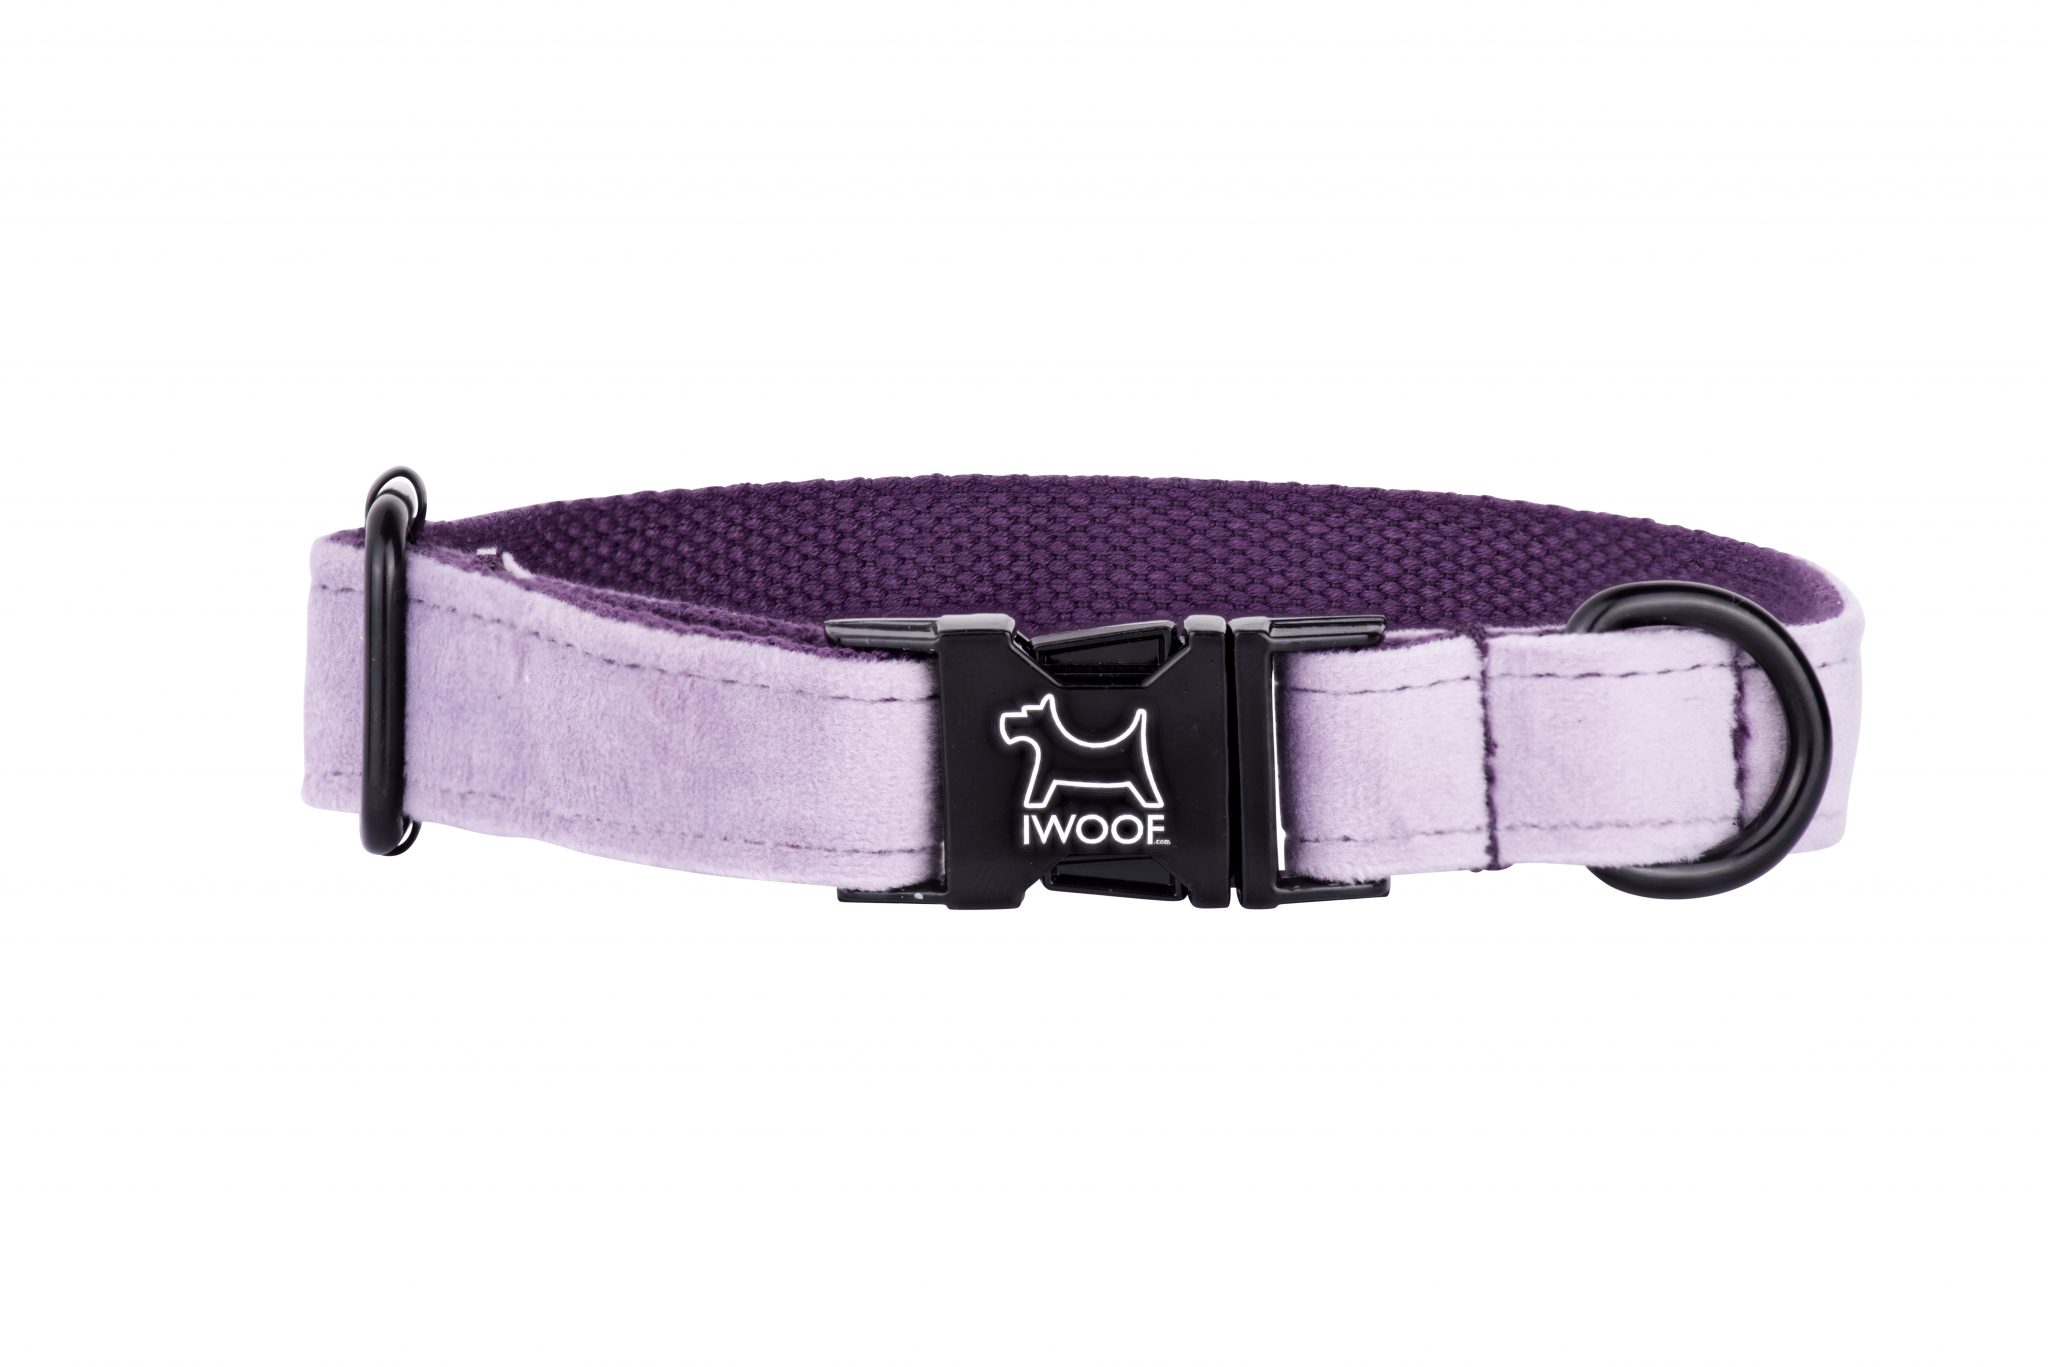 Lavender designer dog collar by IWOOF with black buckle